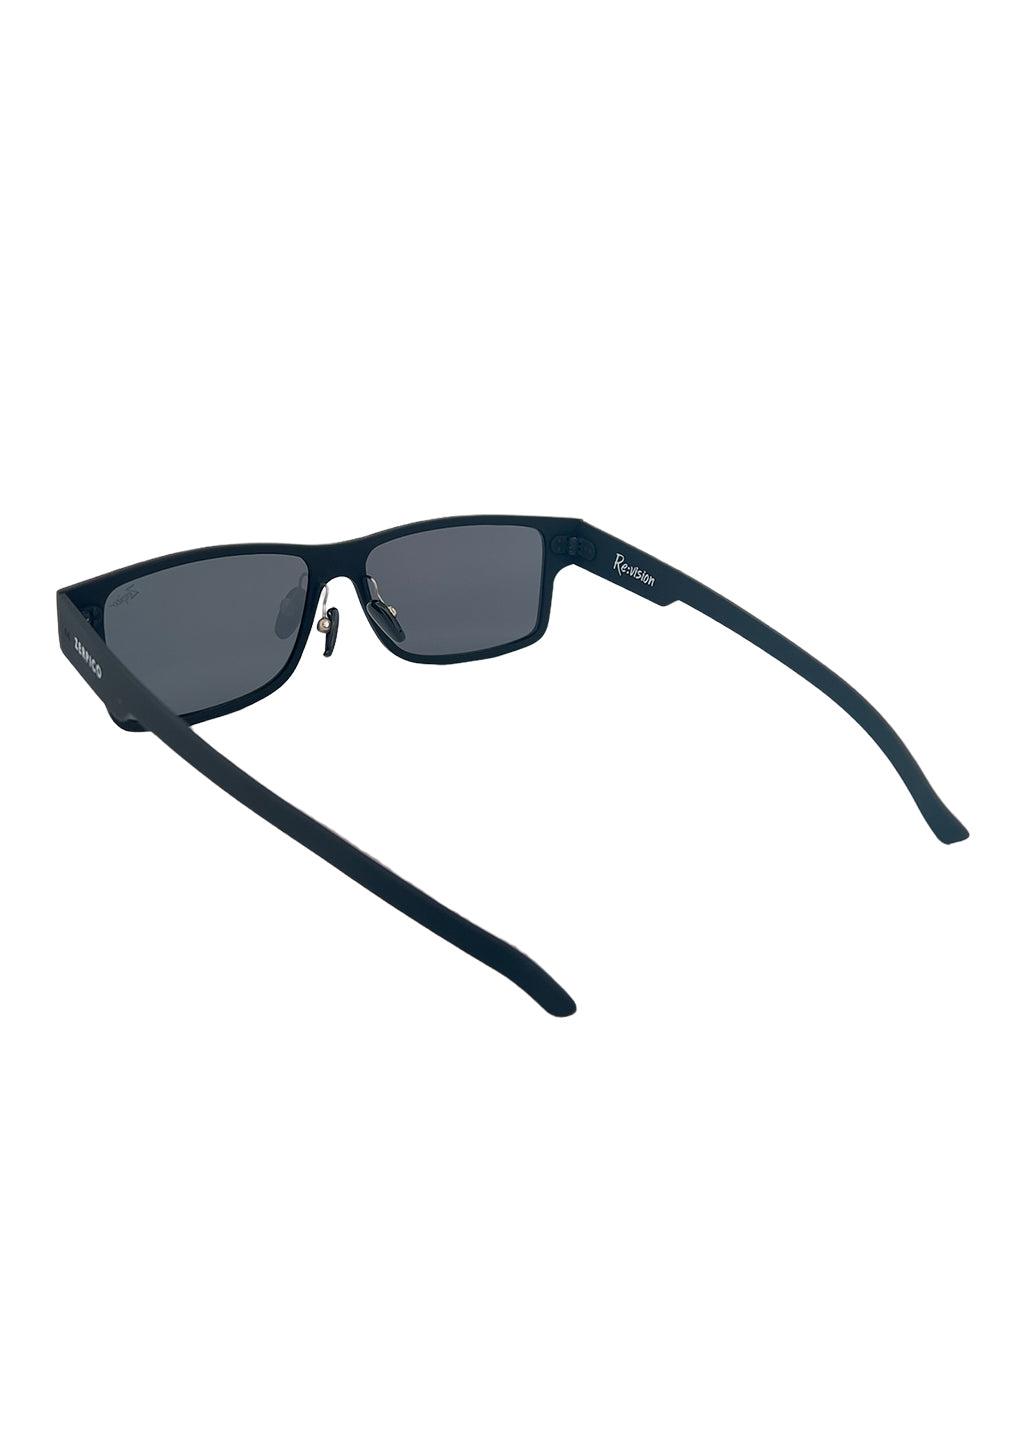 ReVision Square - Eco-Friendly Recyclable Paper Sunglasses-11